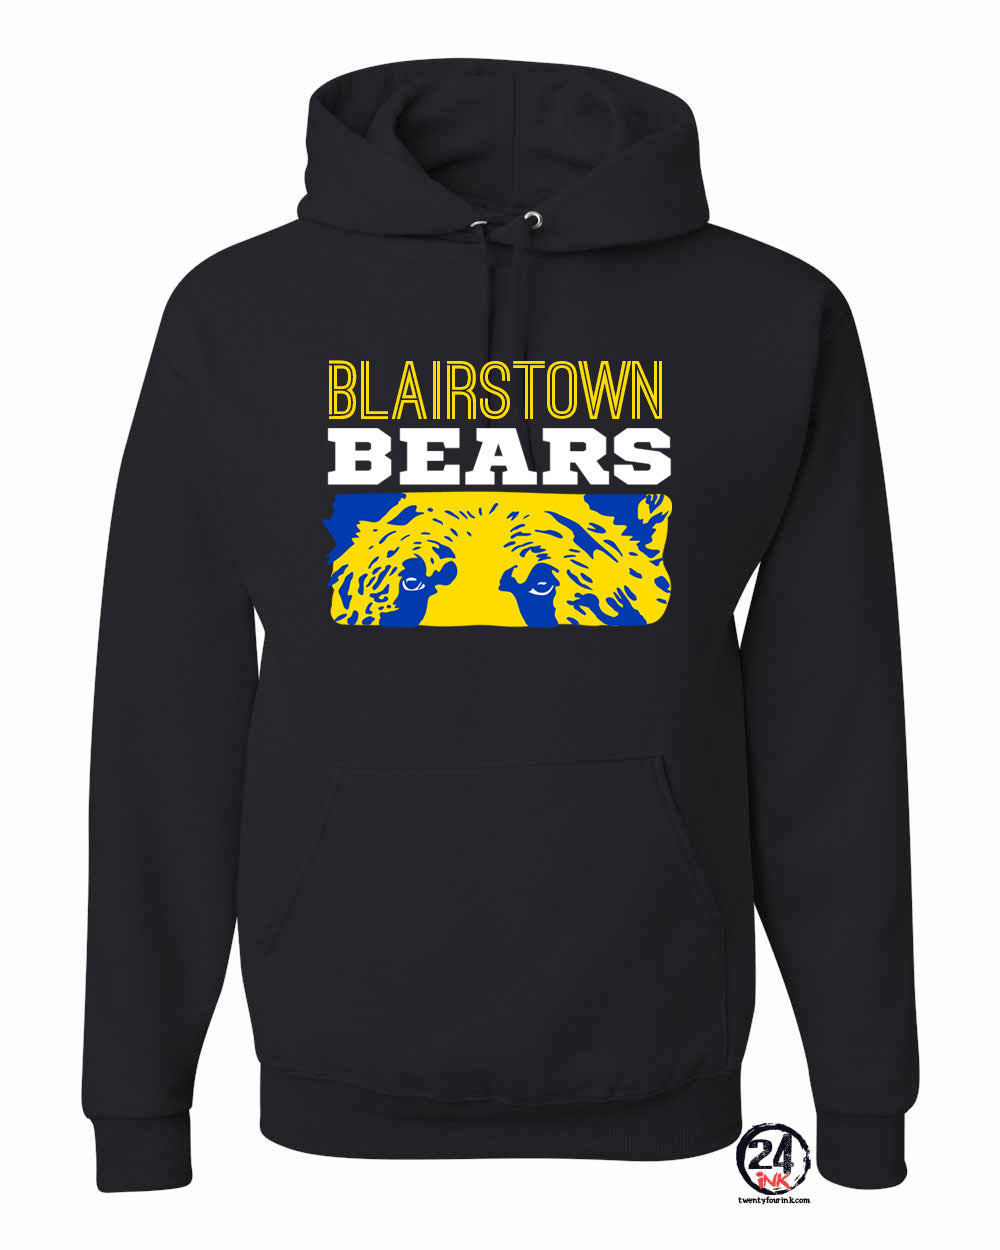 Bears design 4 Hooded Sweatshirt